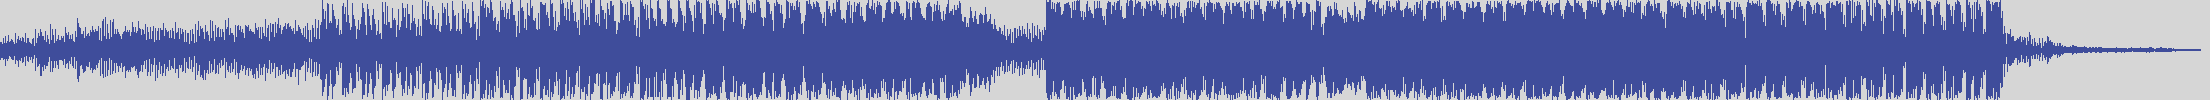 vitti_records [VIT011] Lion M - Kodec [Original Mix] audio wave form